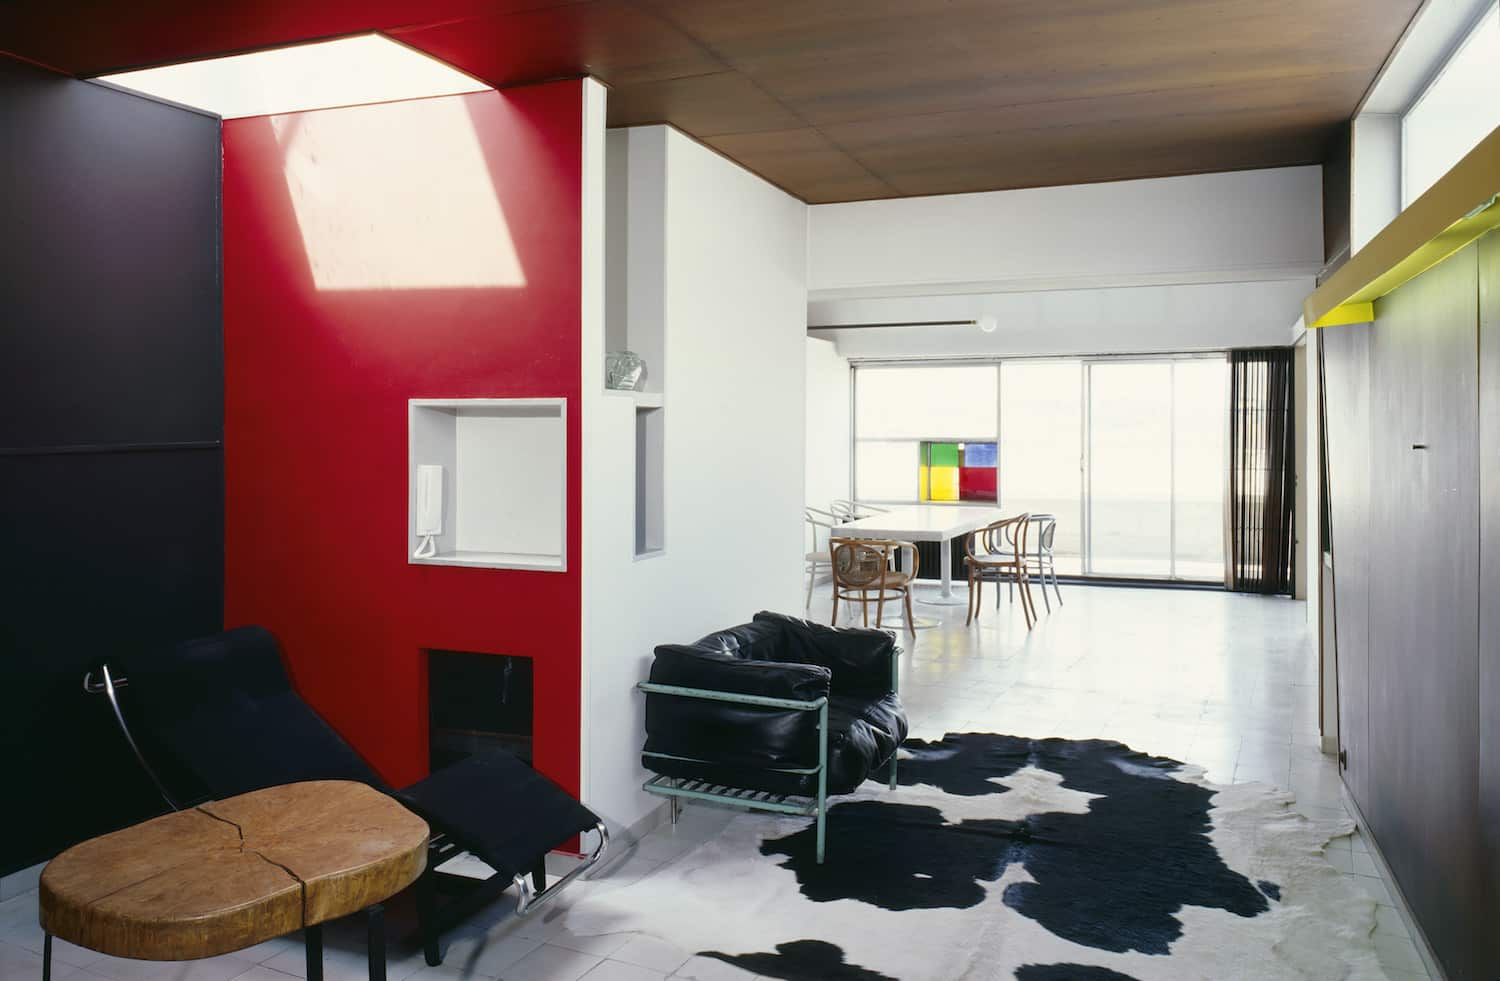 the living room in Le Corbusier's Paris apartment